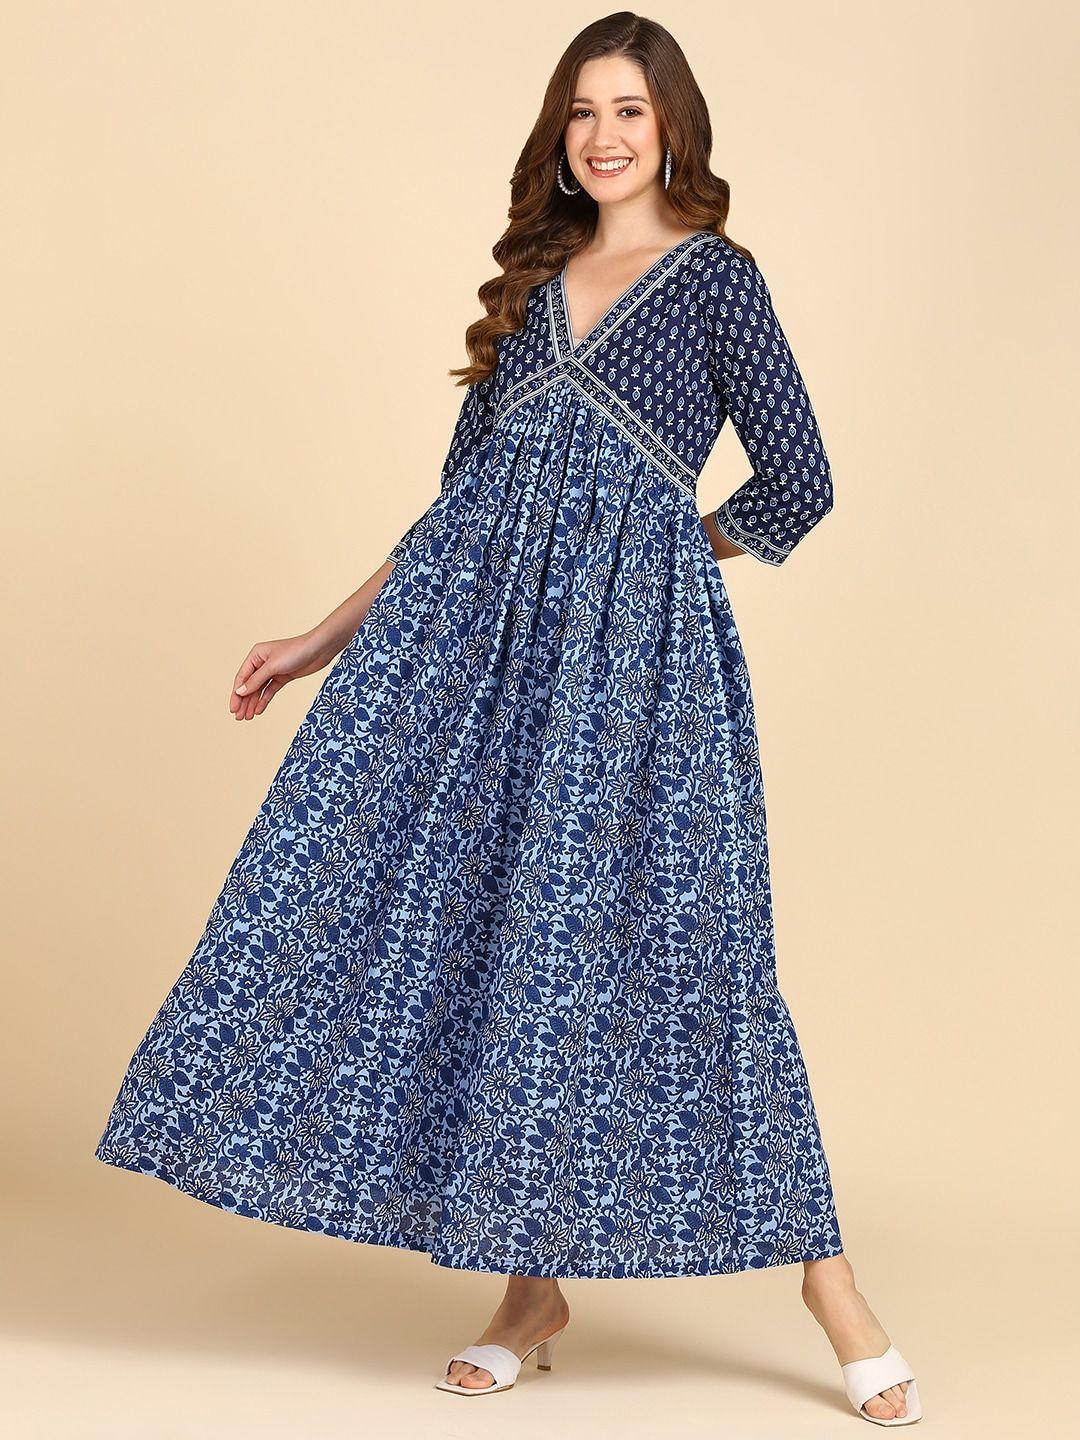 znx clothing blue floral printed v-neck empire dress